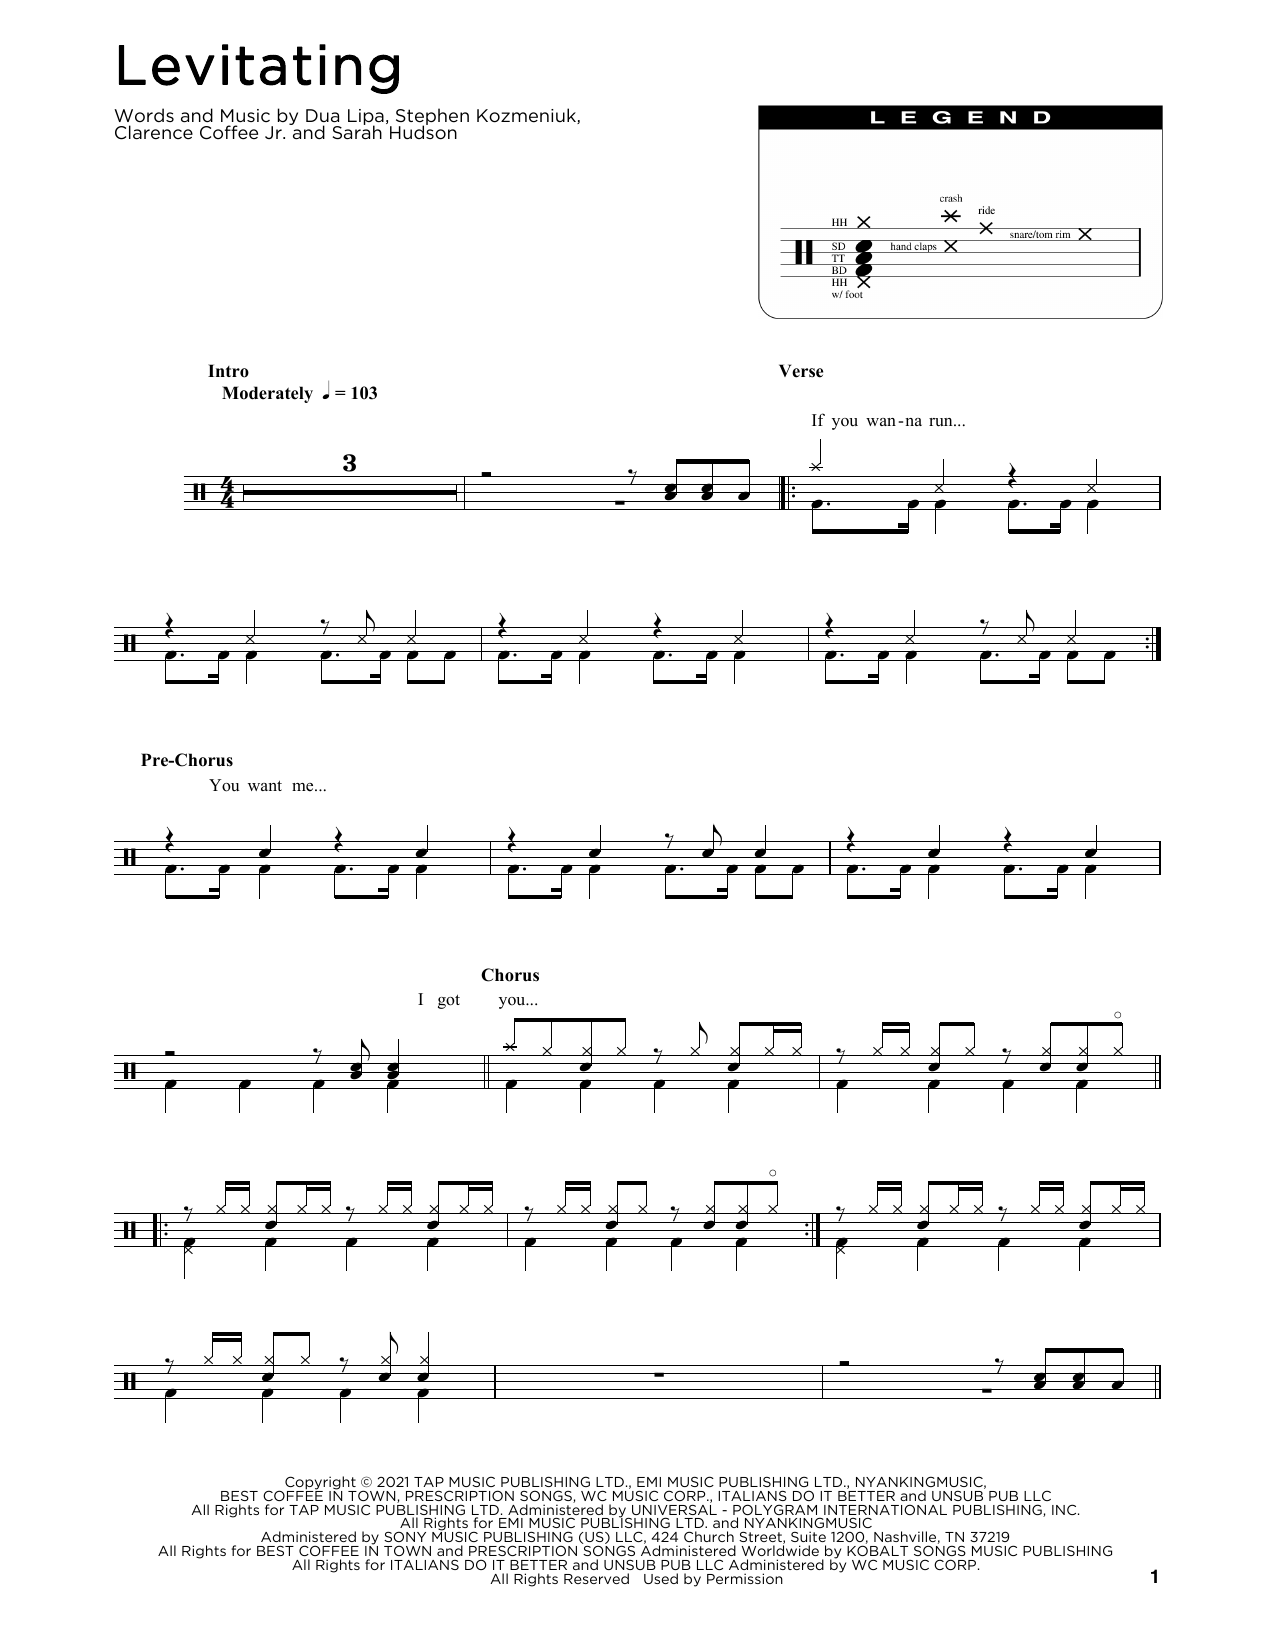 Dua Lipa "Levitating" Sheet Music Download Printable Pop PDF Score